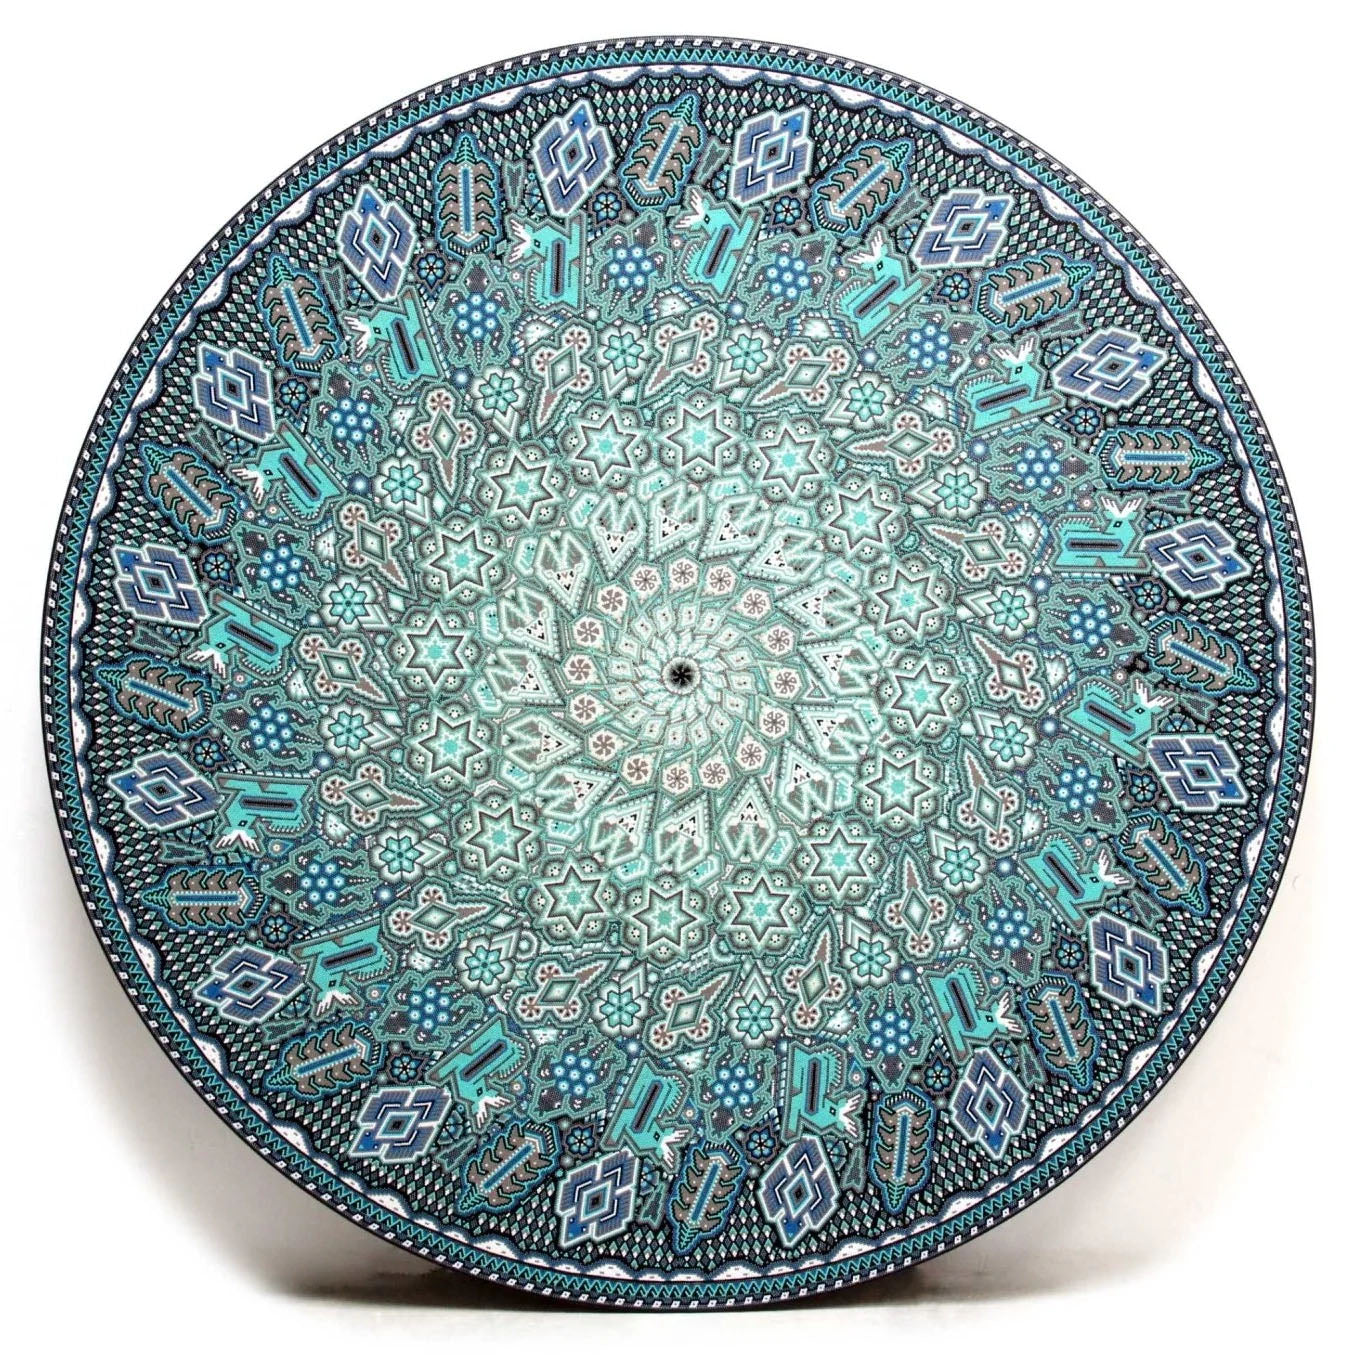 Nierika de chaquira de cristal arte huichol wixárika artesanía